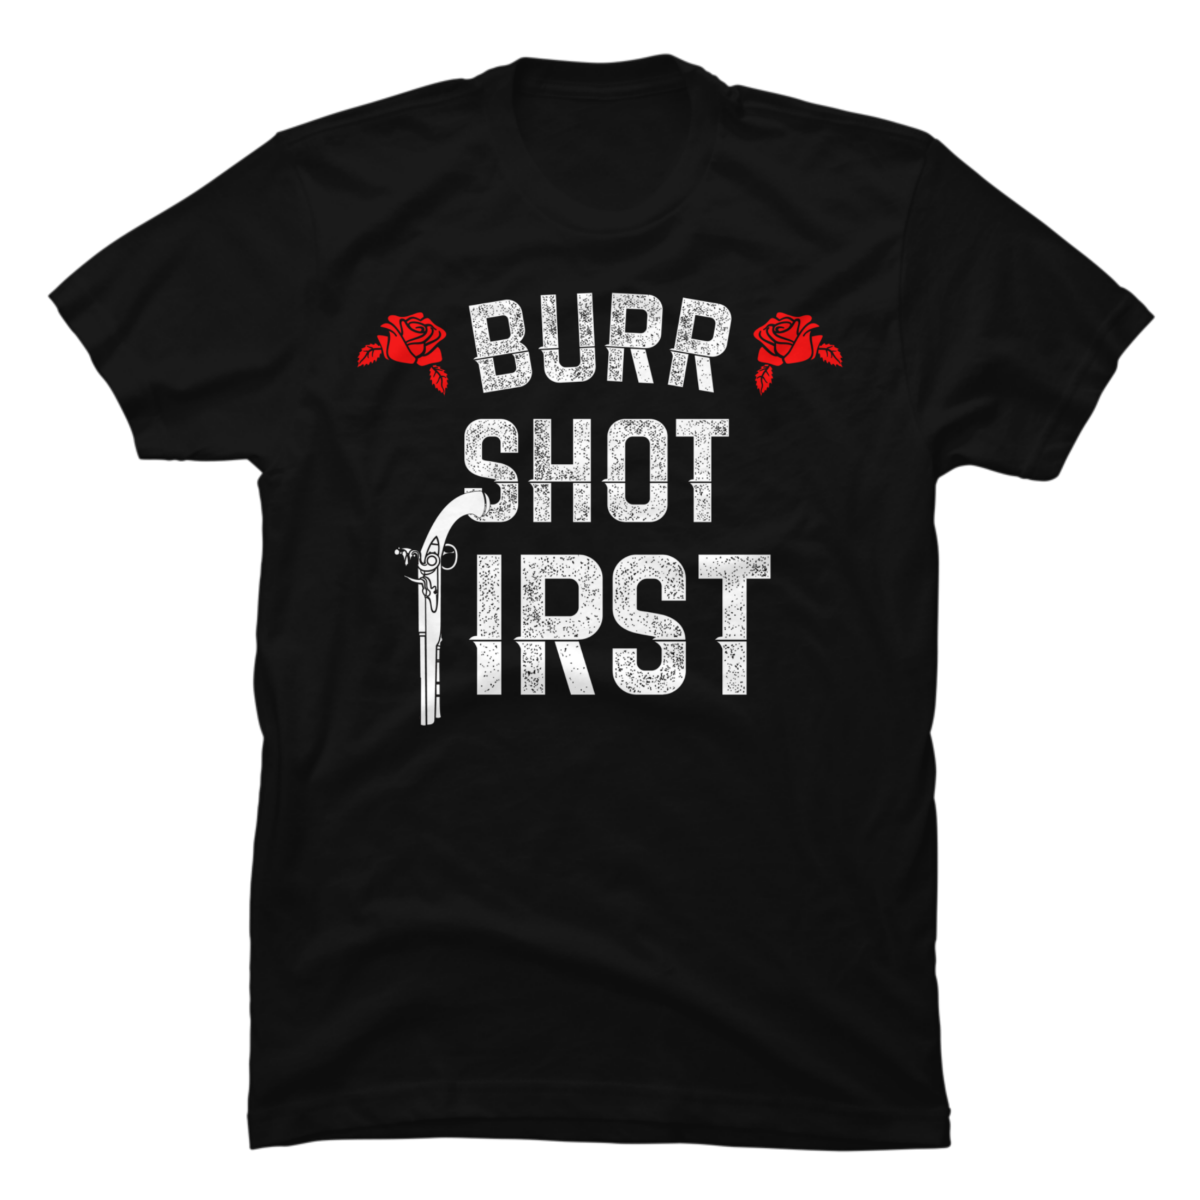 burr shot first tshirt